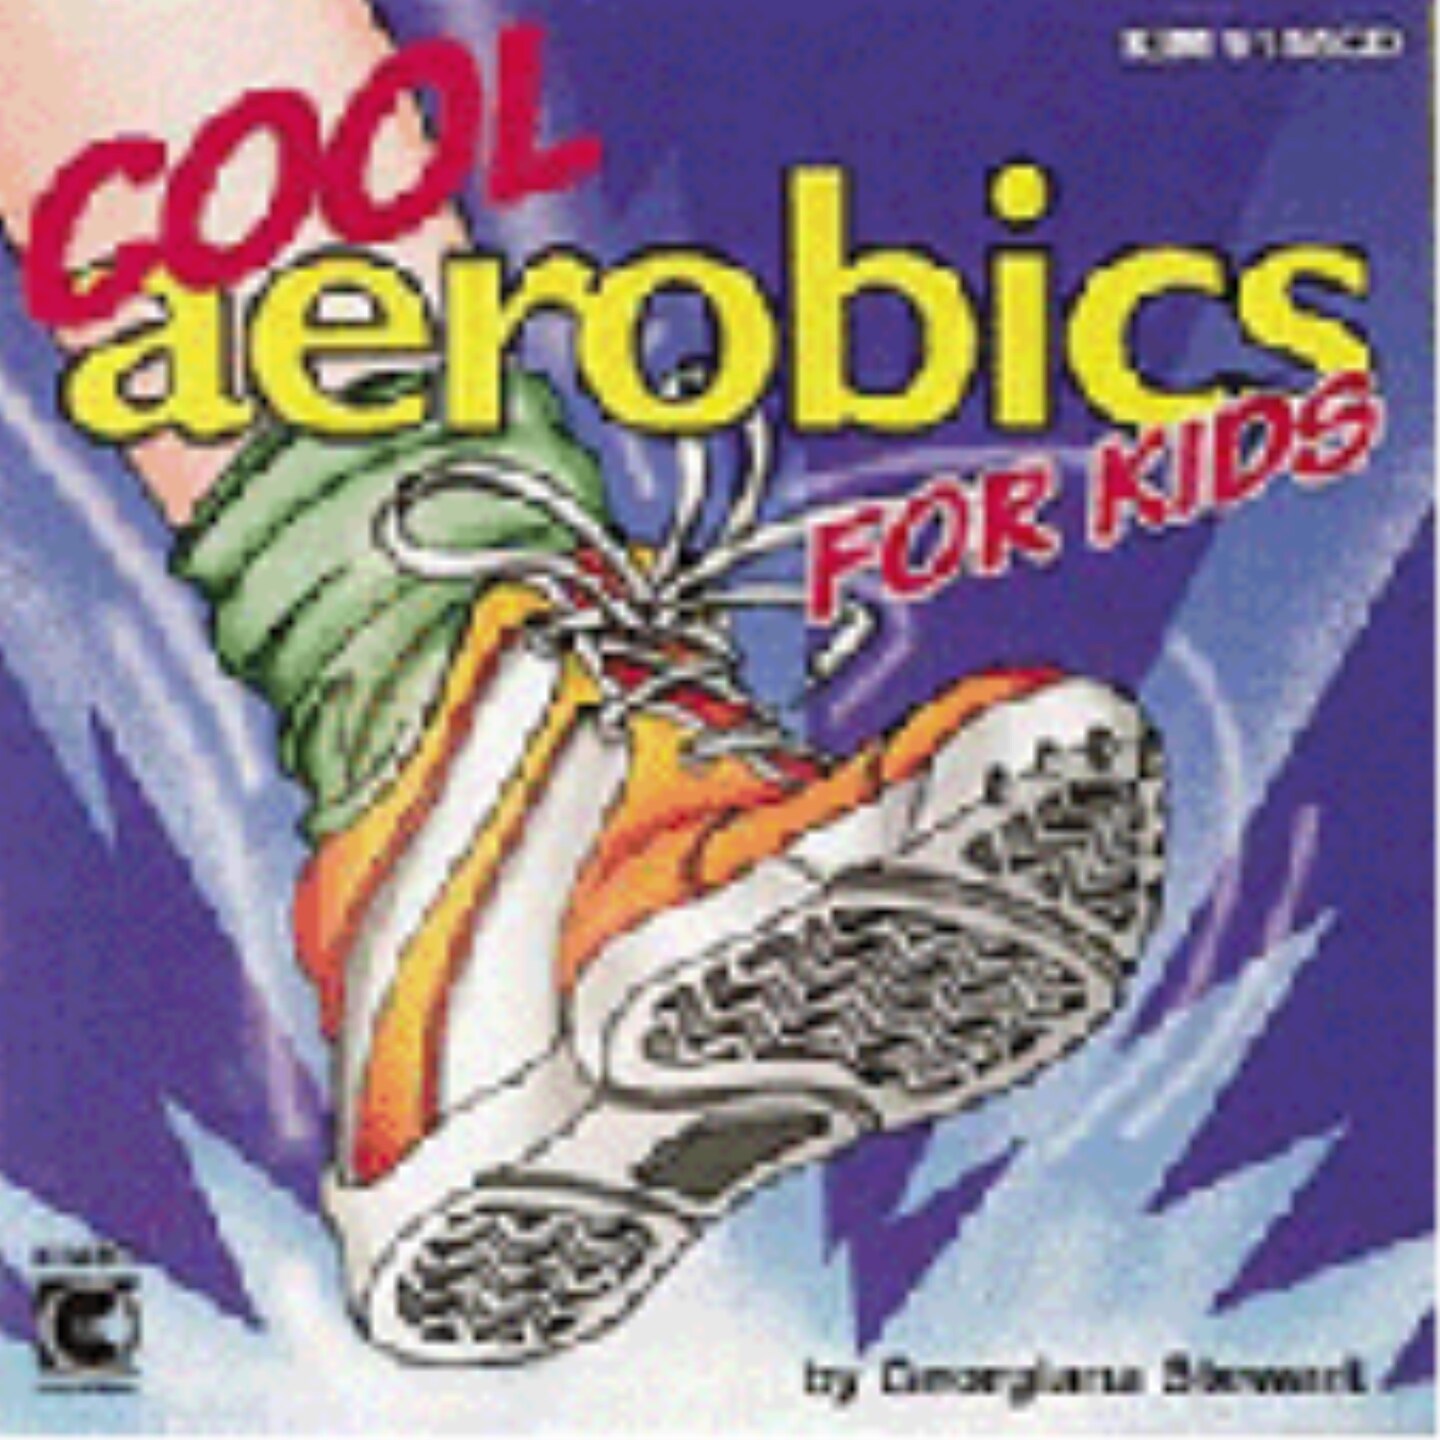 Cool Aerobics for Kids Educational CD